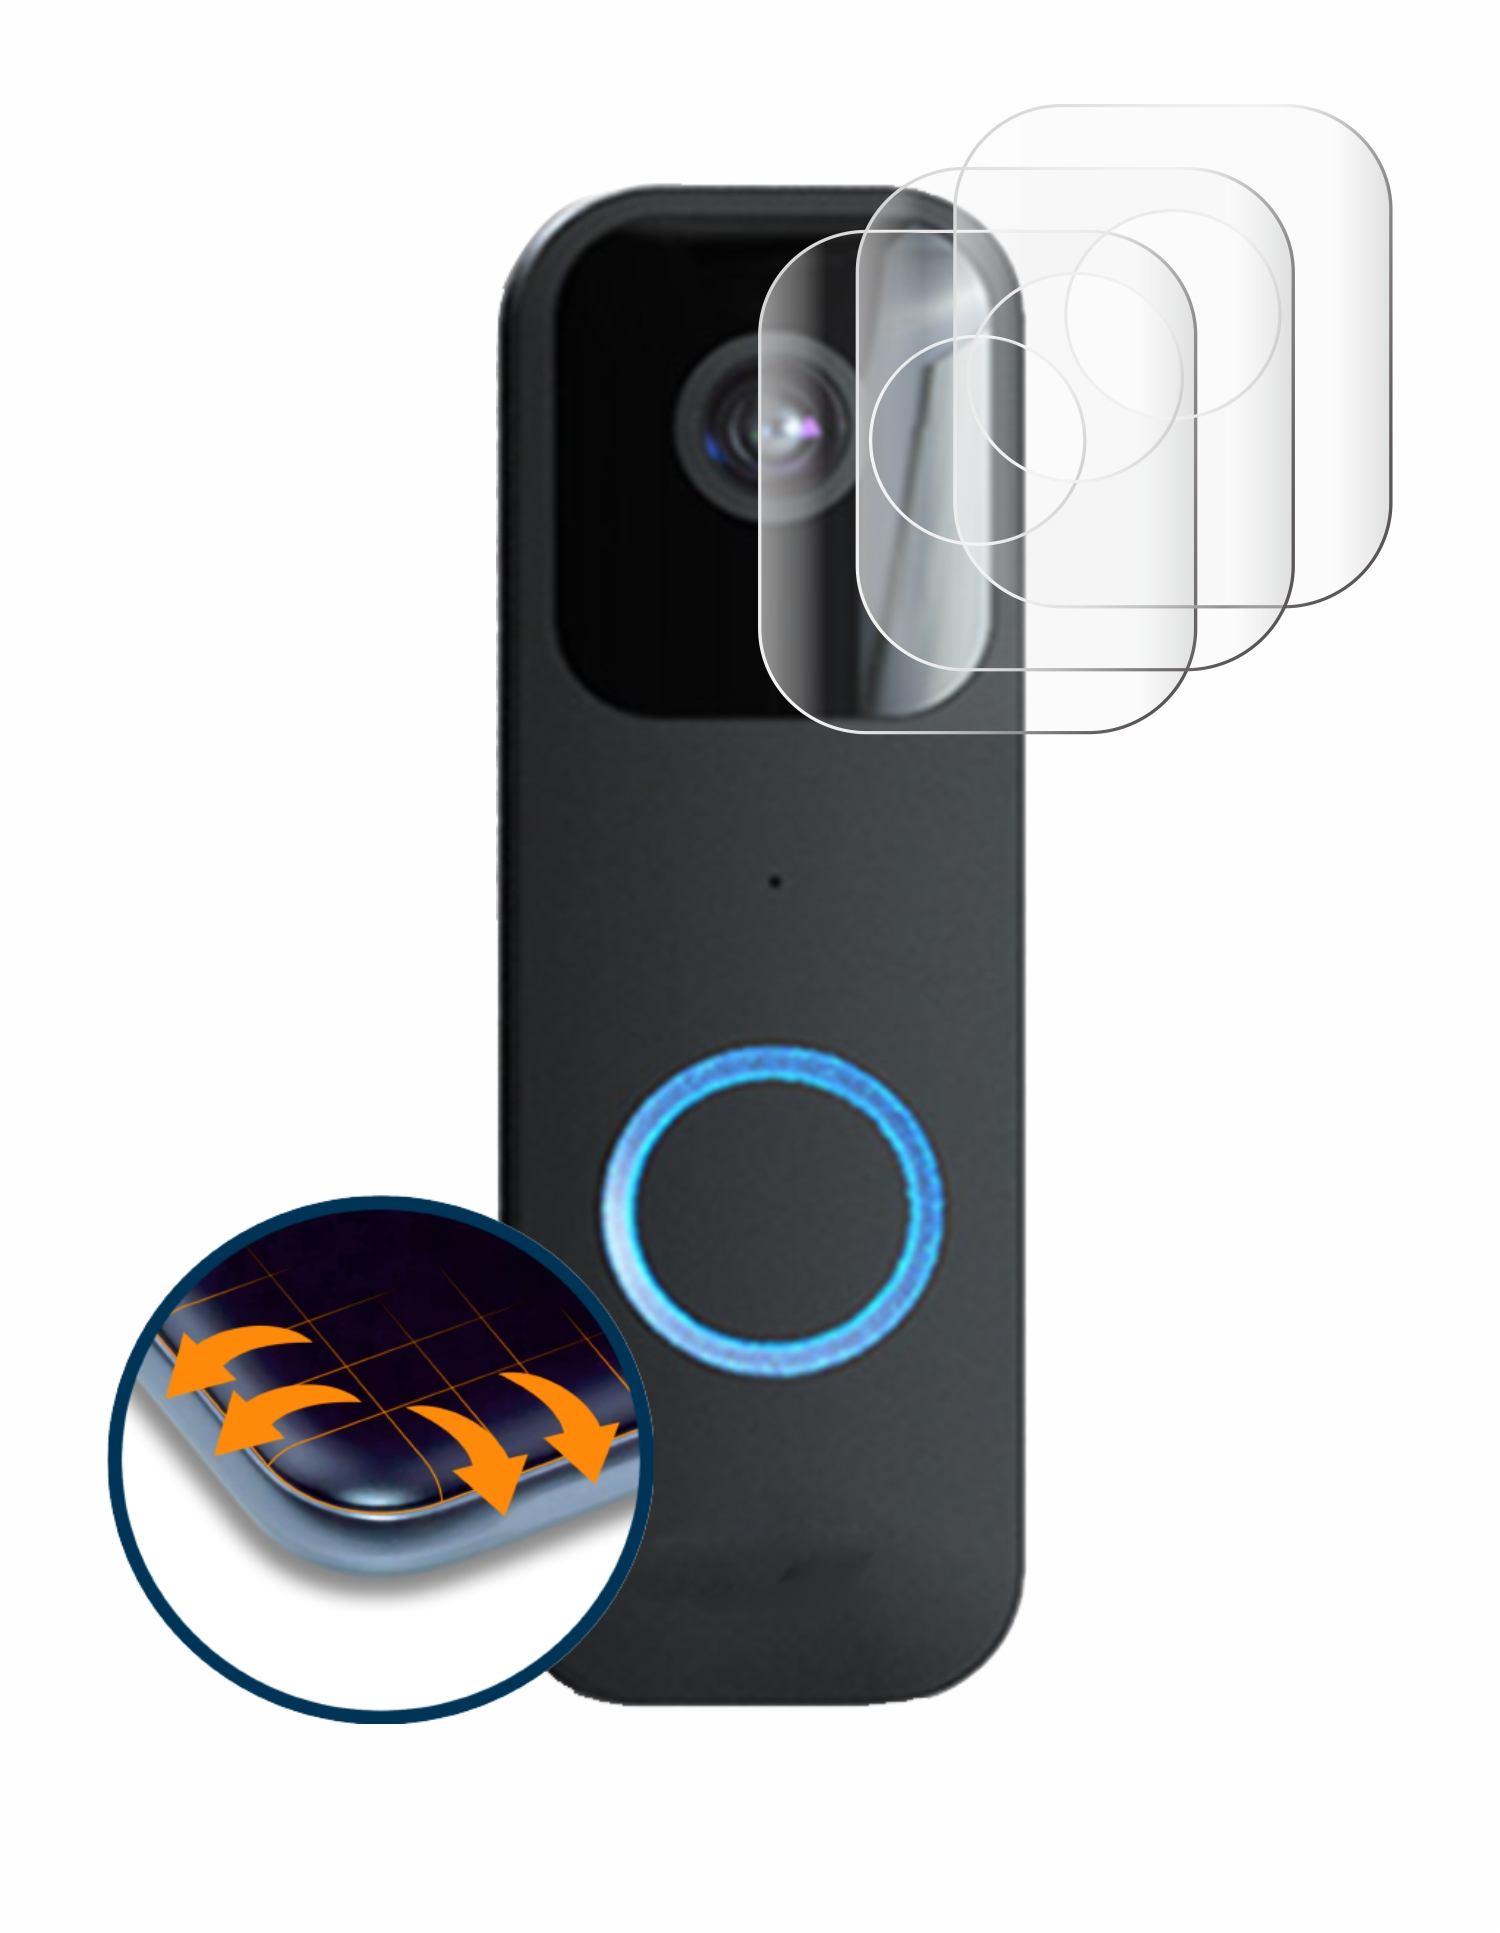 SAVVIES 4x Flex Full-Cover Schutzfolie(für Video 3D Curved Doorbell) Blink